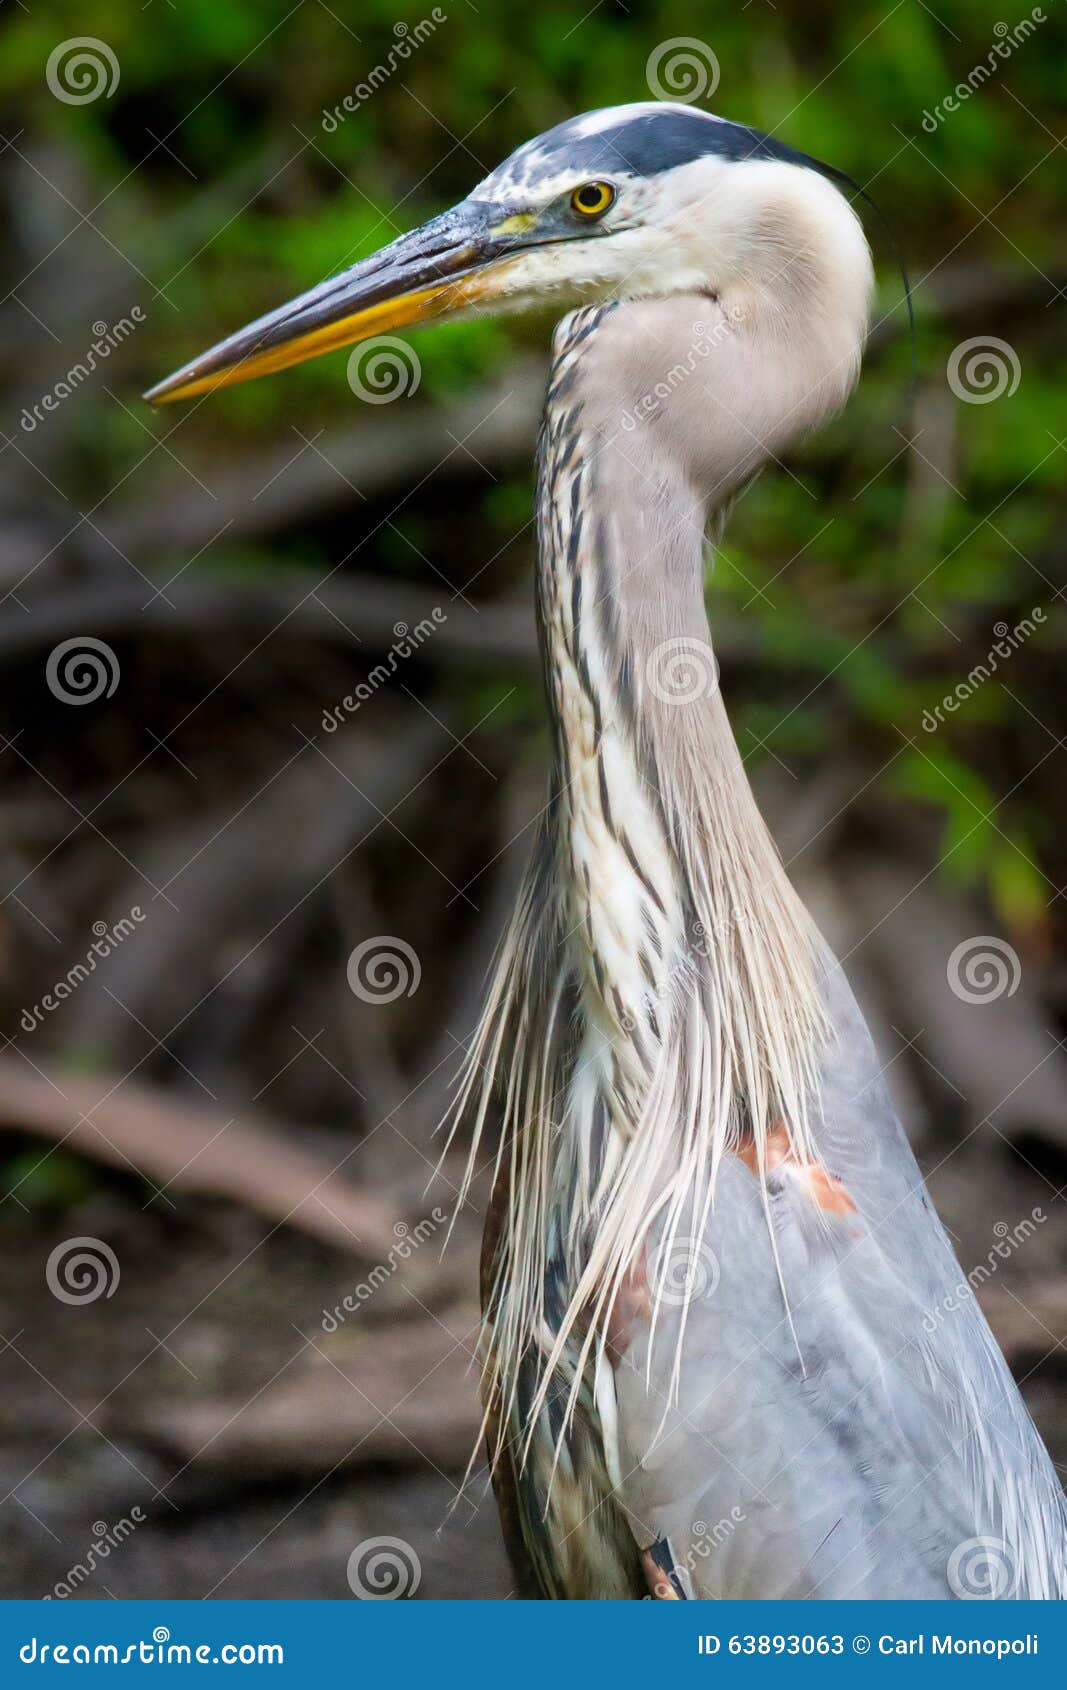 great-blue-heron-neck-elongated-kinked-63893063.jpg